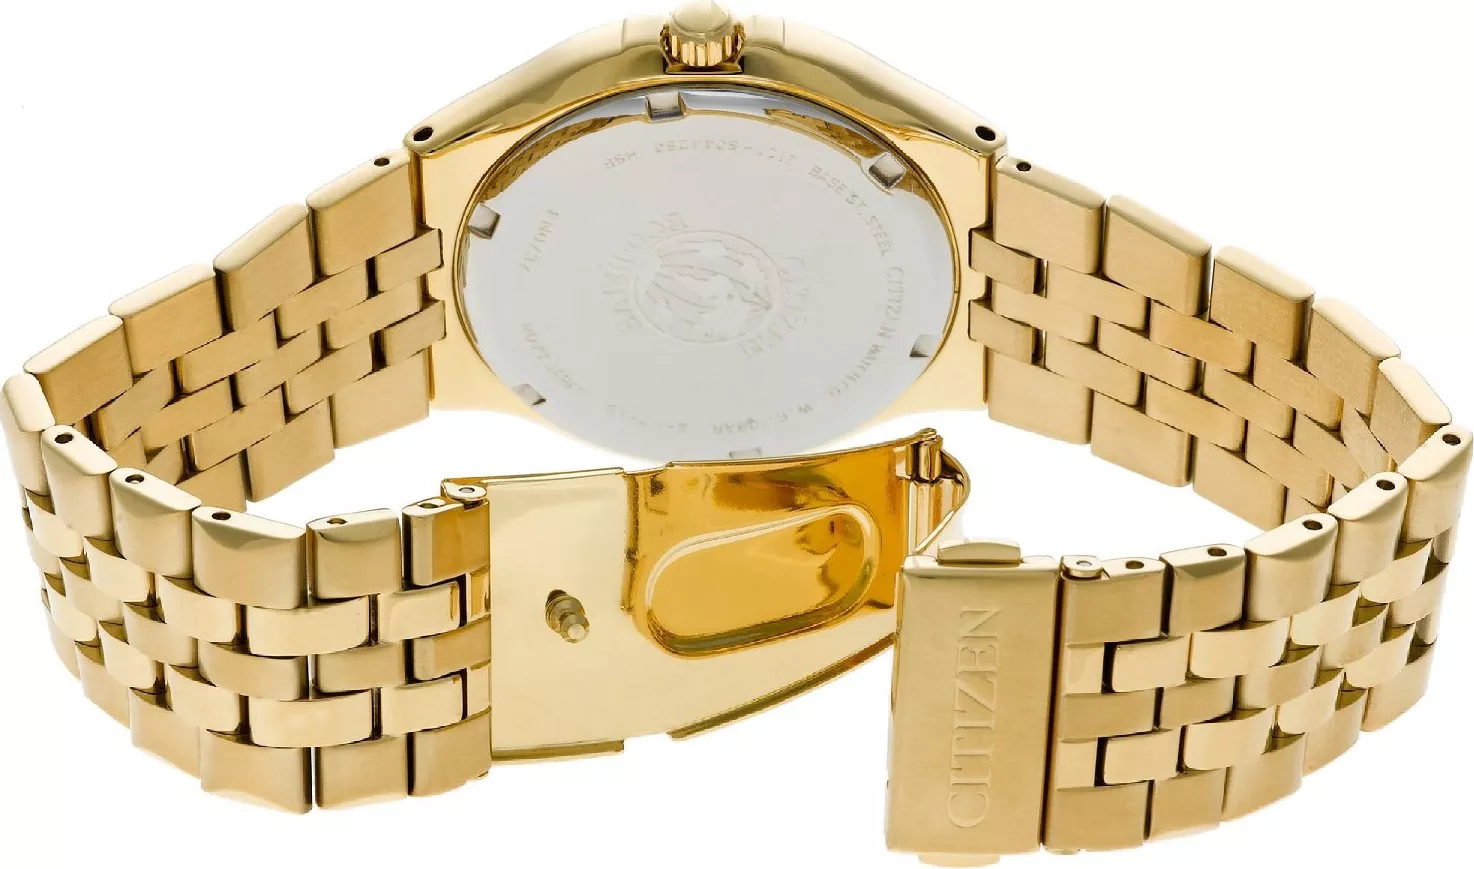 Citizen Men's Eco-Drive Corso Gold-Tone Watch, 38mm